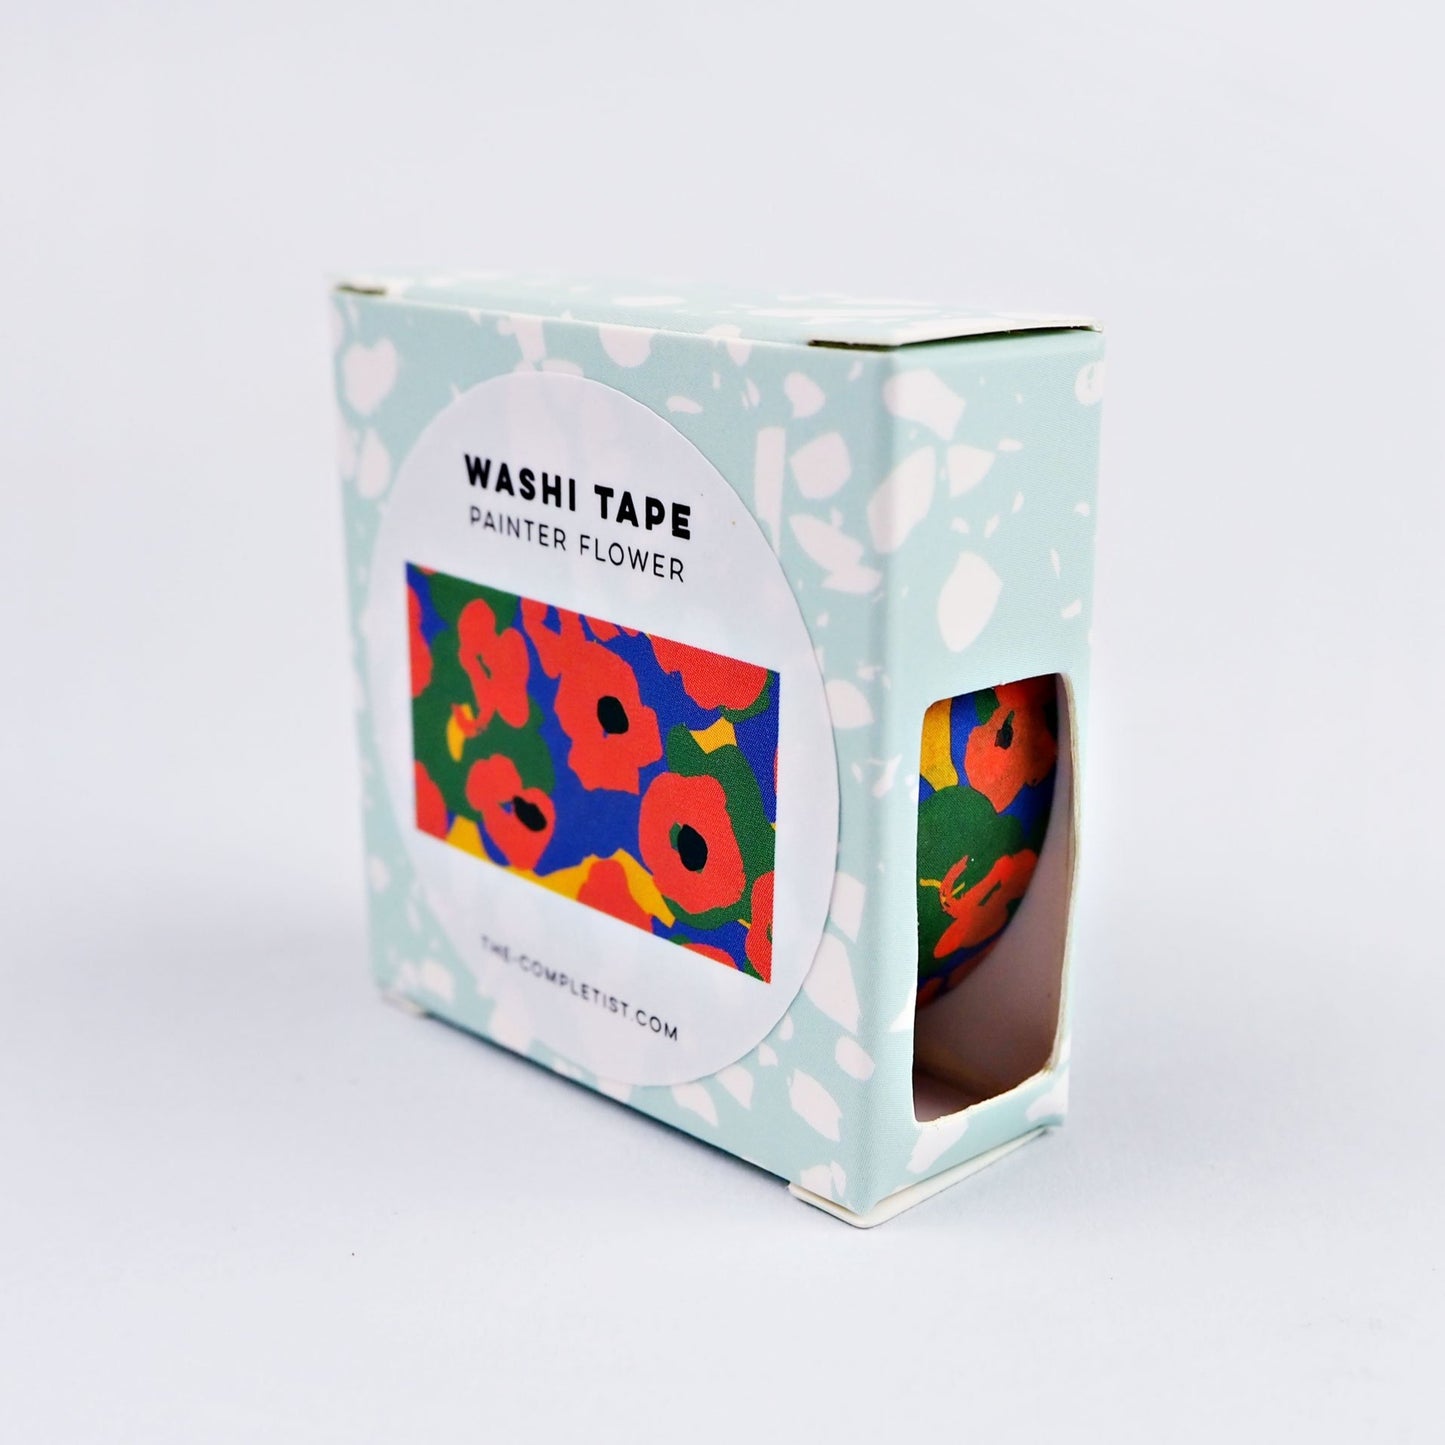 Washi Tape - Painter Flower